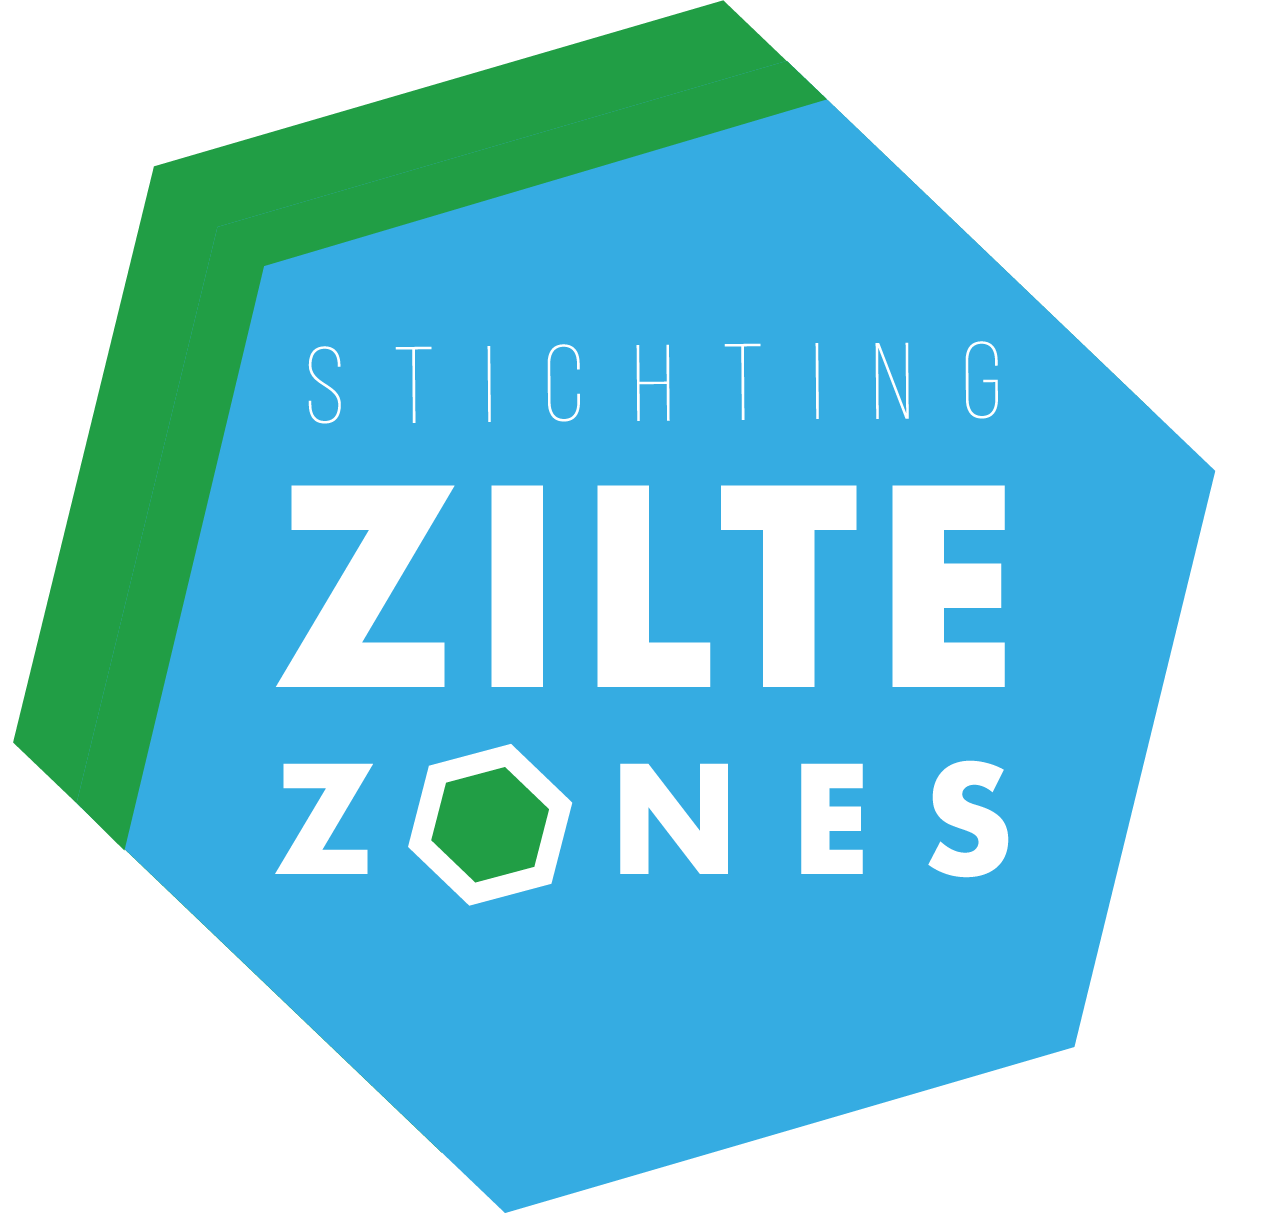 Stichting Zilte Zones